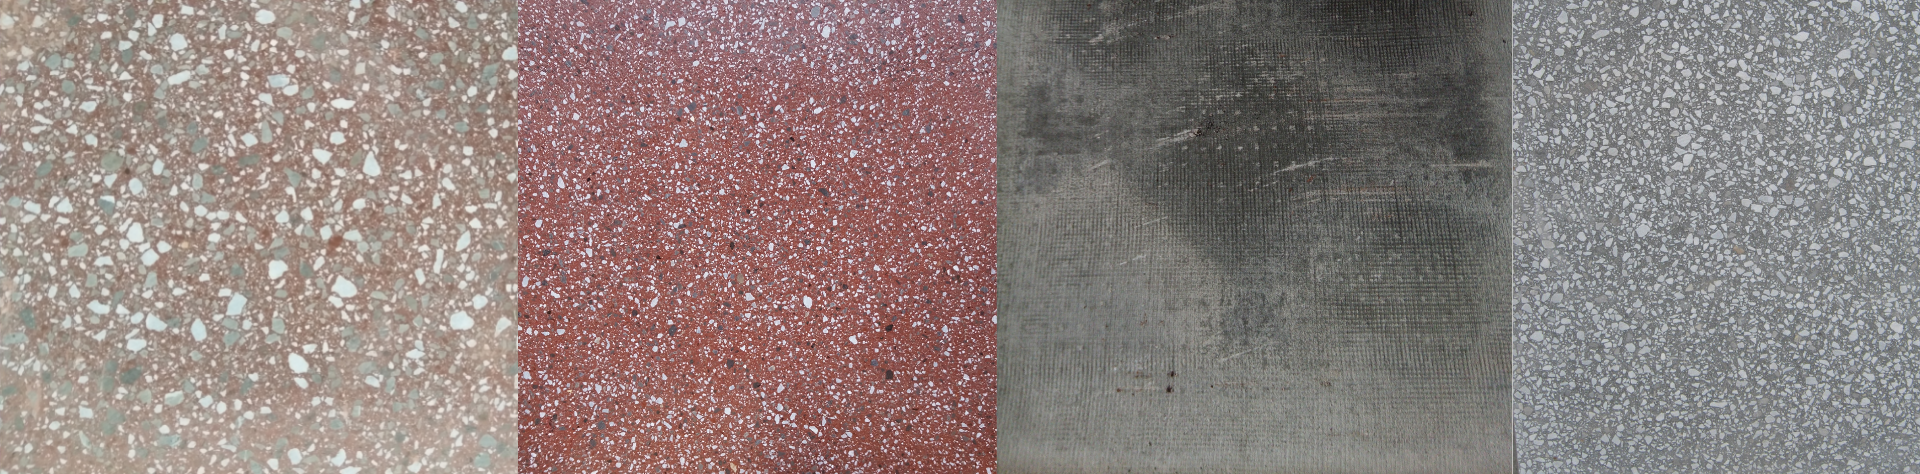 Мозаичные бетонные плиты 5КА-3 (5К3) 400х400х35